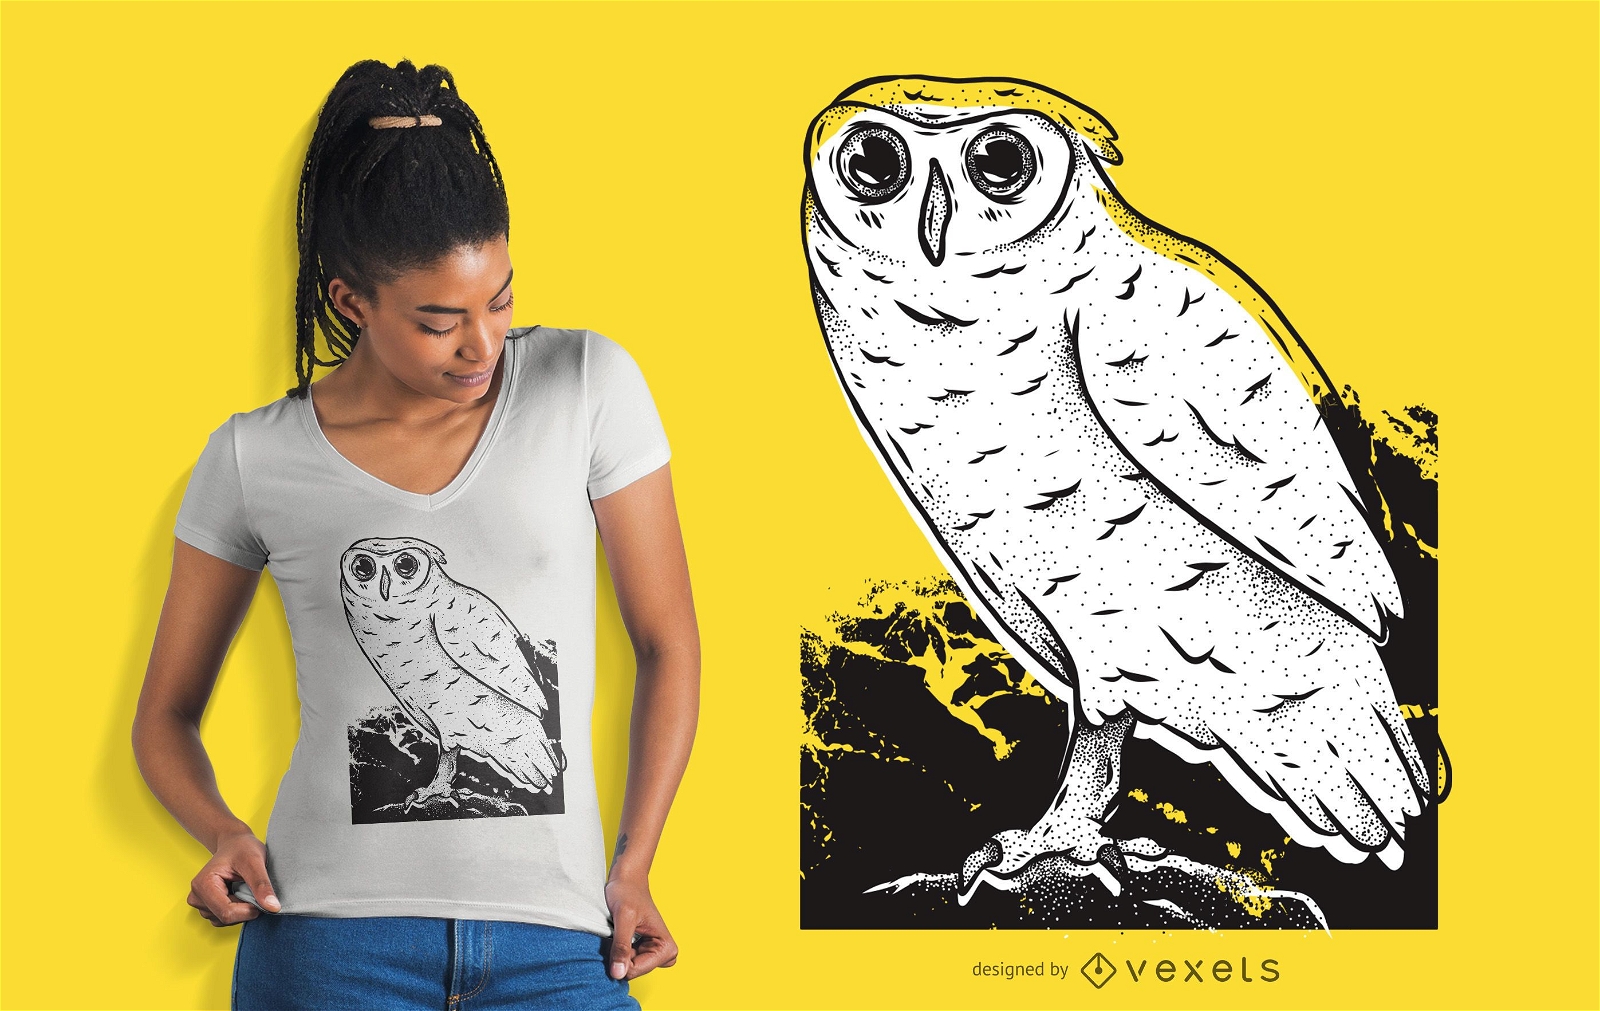 Owl hand drawn t-shirt design